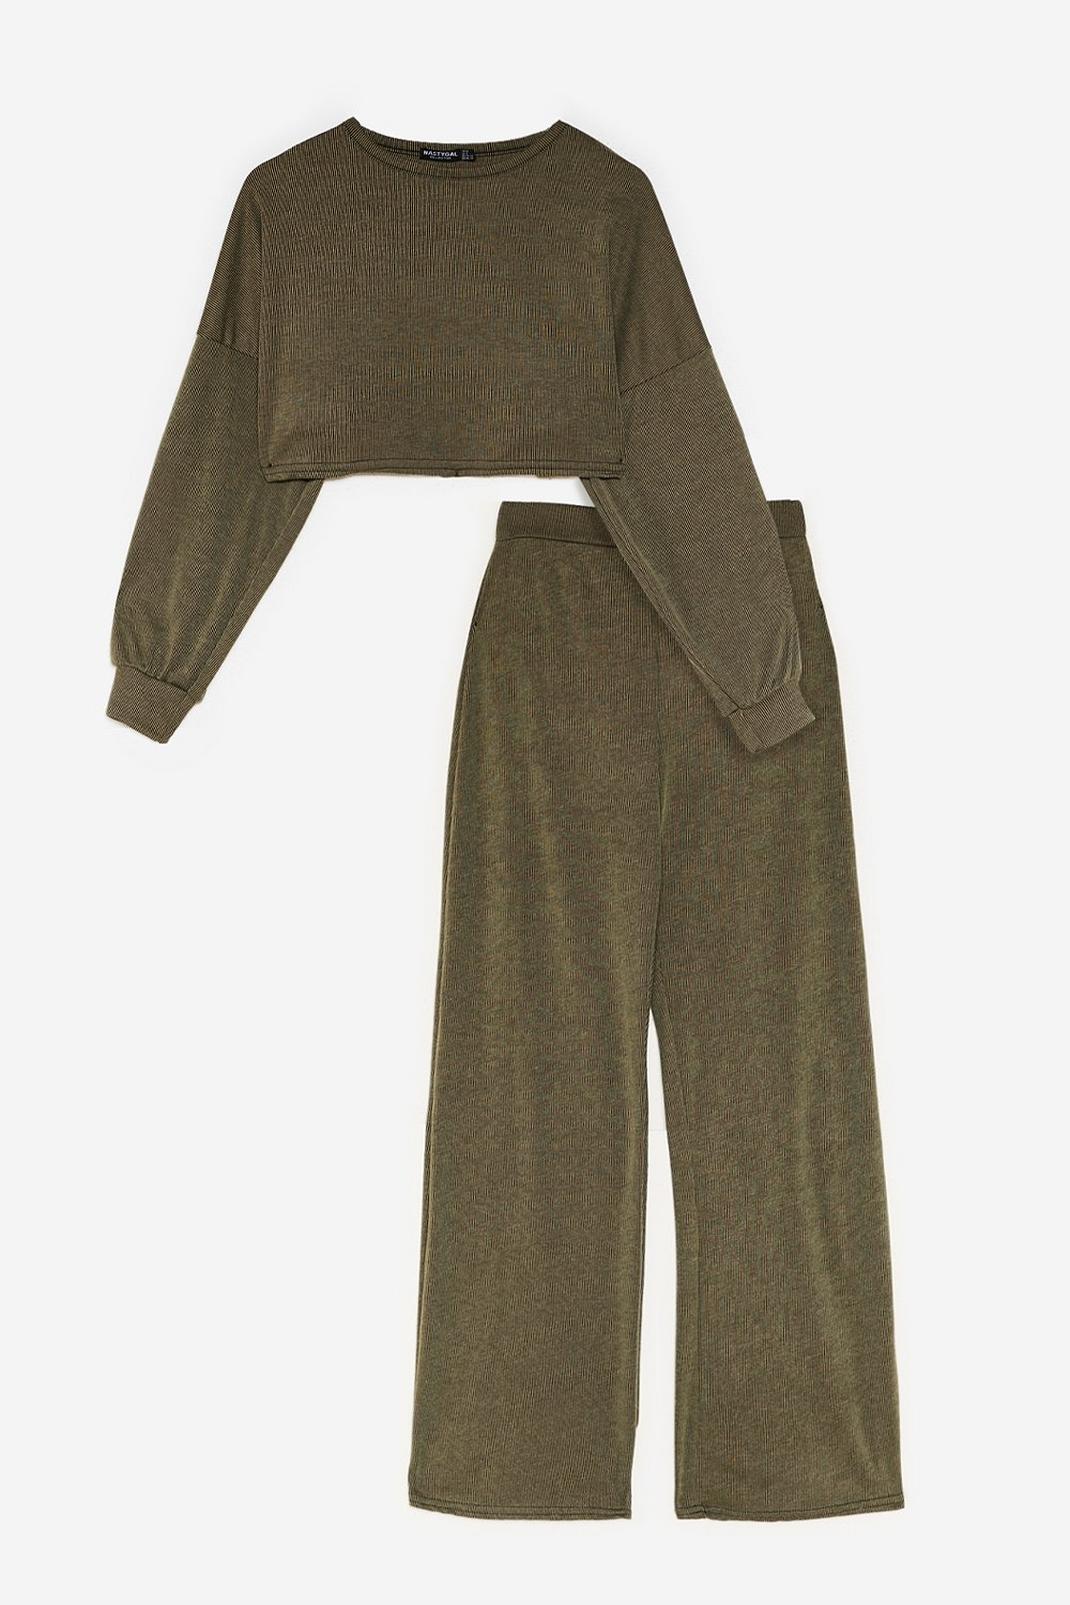 Khaki Petite Crop Top and Pants Loungewear Set image number 1